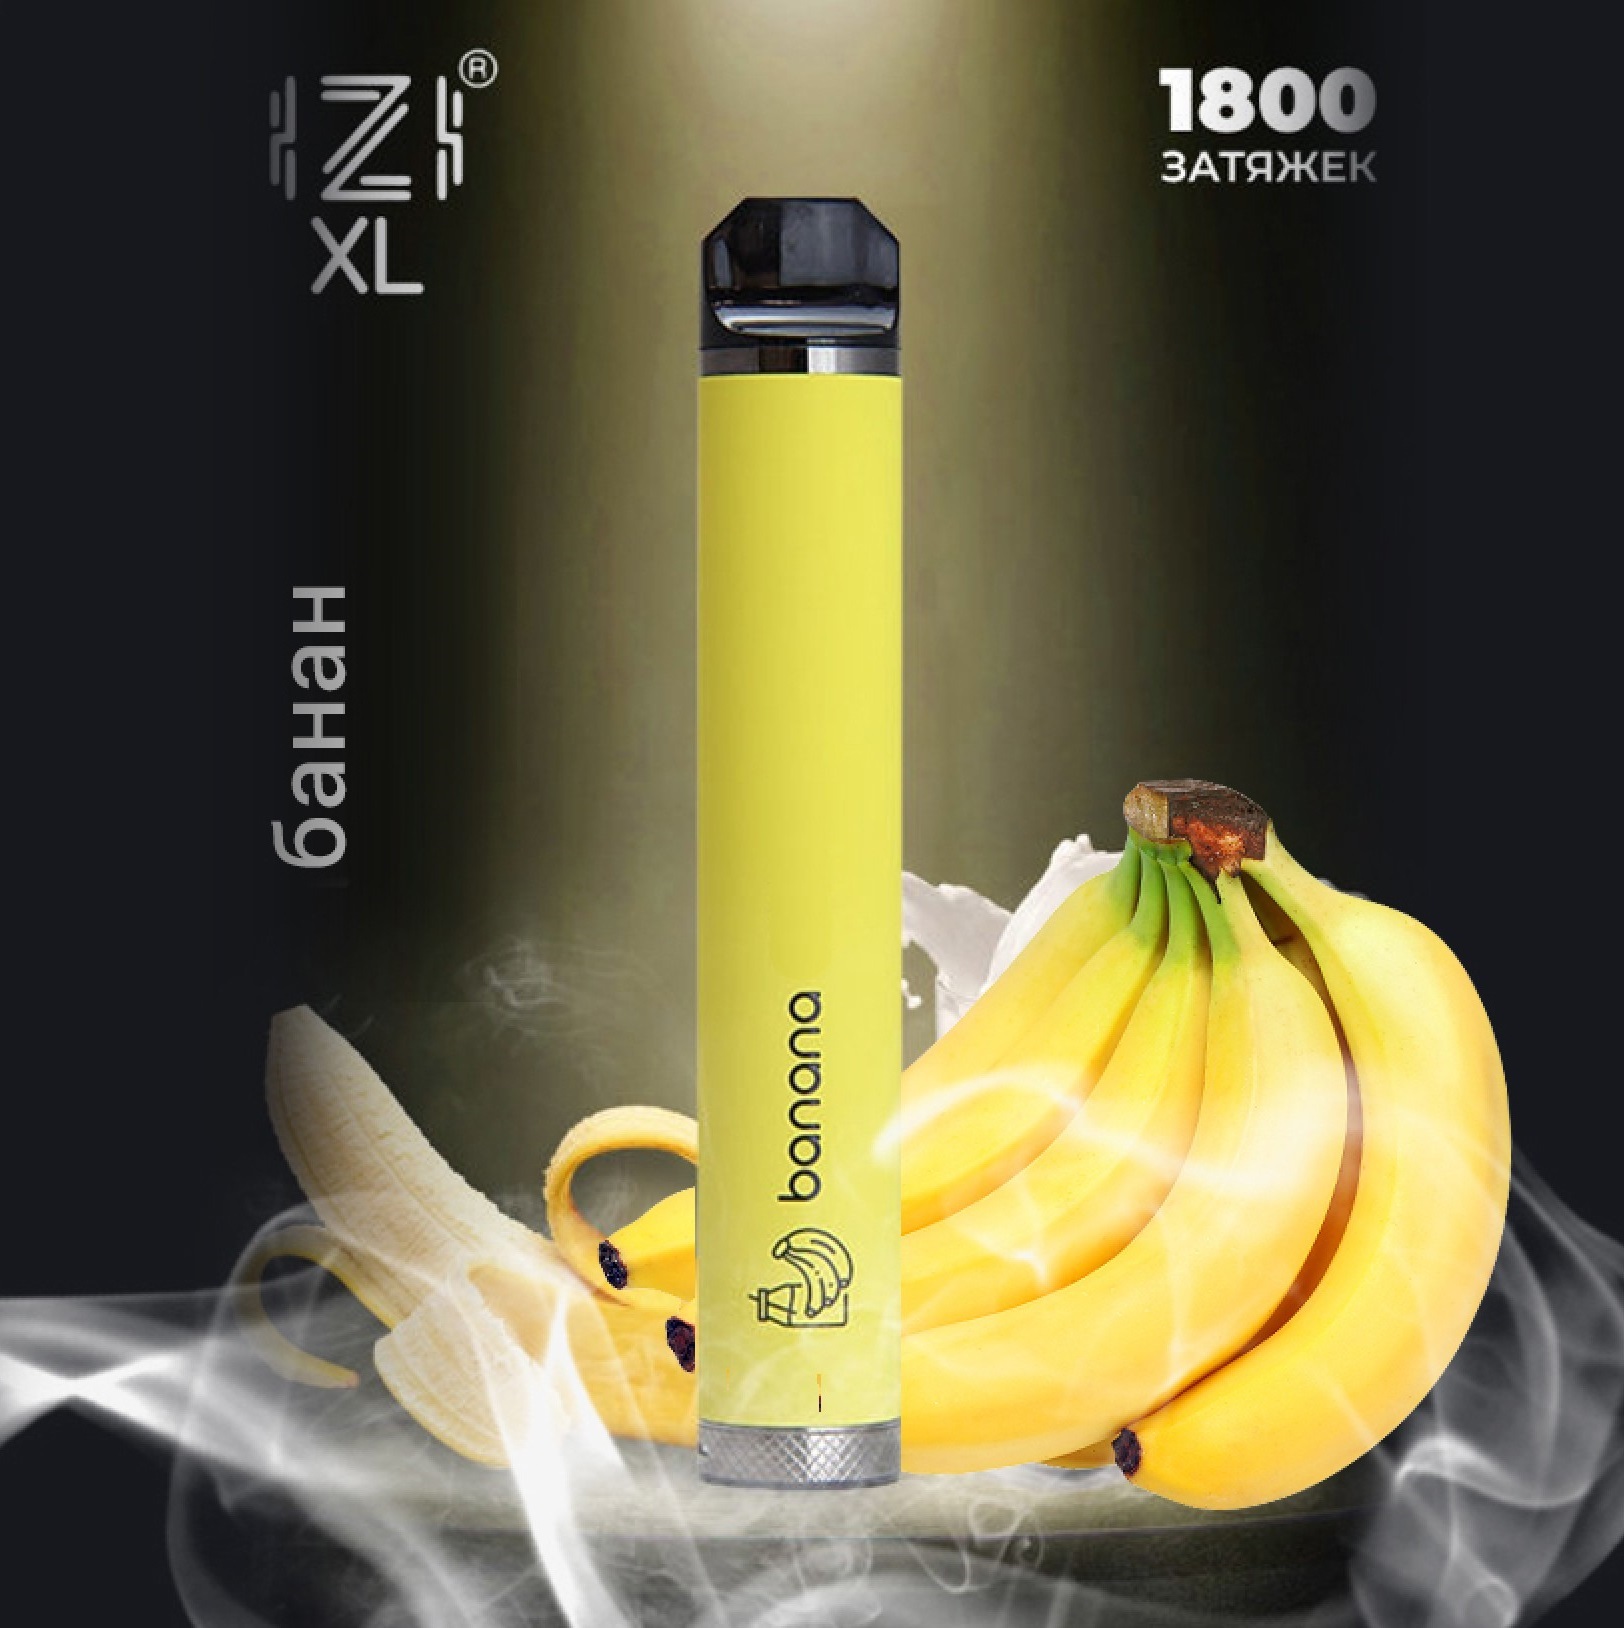 Izi XL банановое молоко (1800 затяжек). XL банан табак. Izi XL коктейль Карибский (1800 затяжек). Izi XL манго (1800 затяжек).